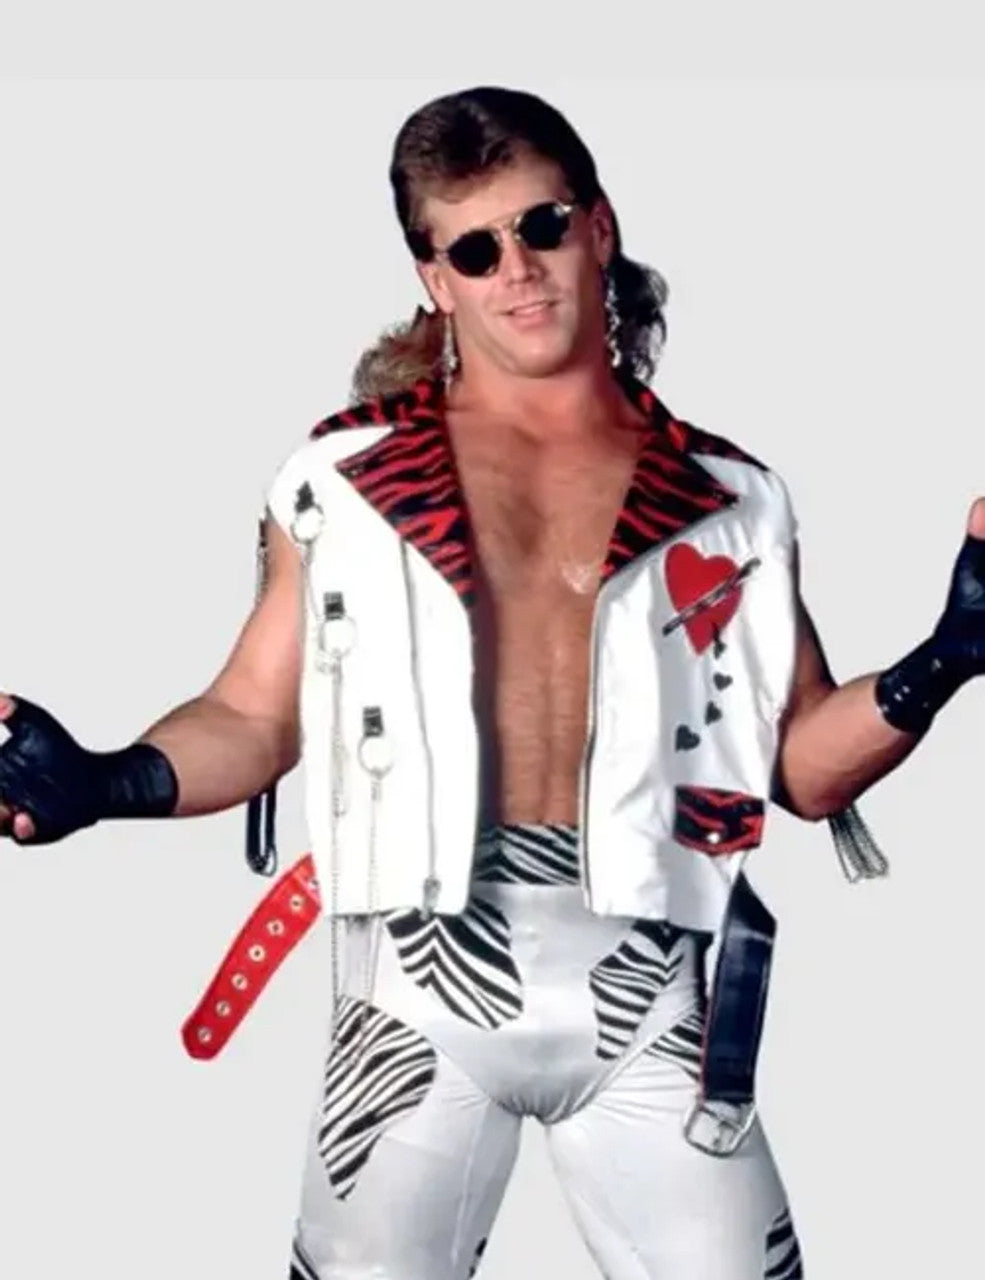 Wrestler Shawn Michaels White Leather Jacket